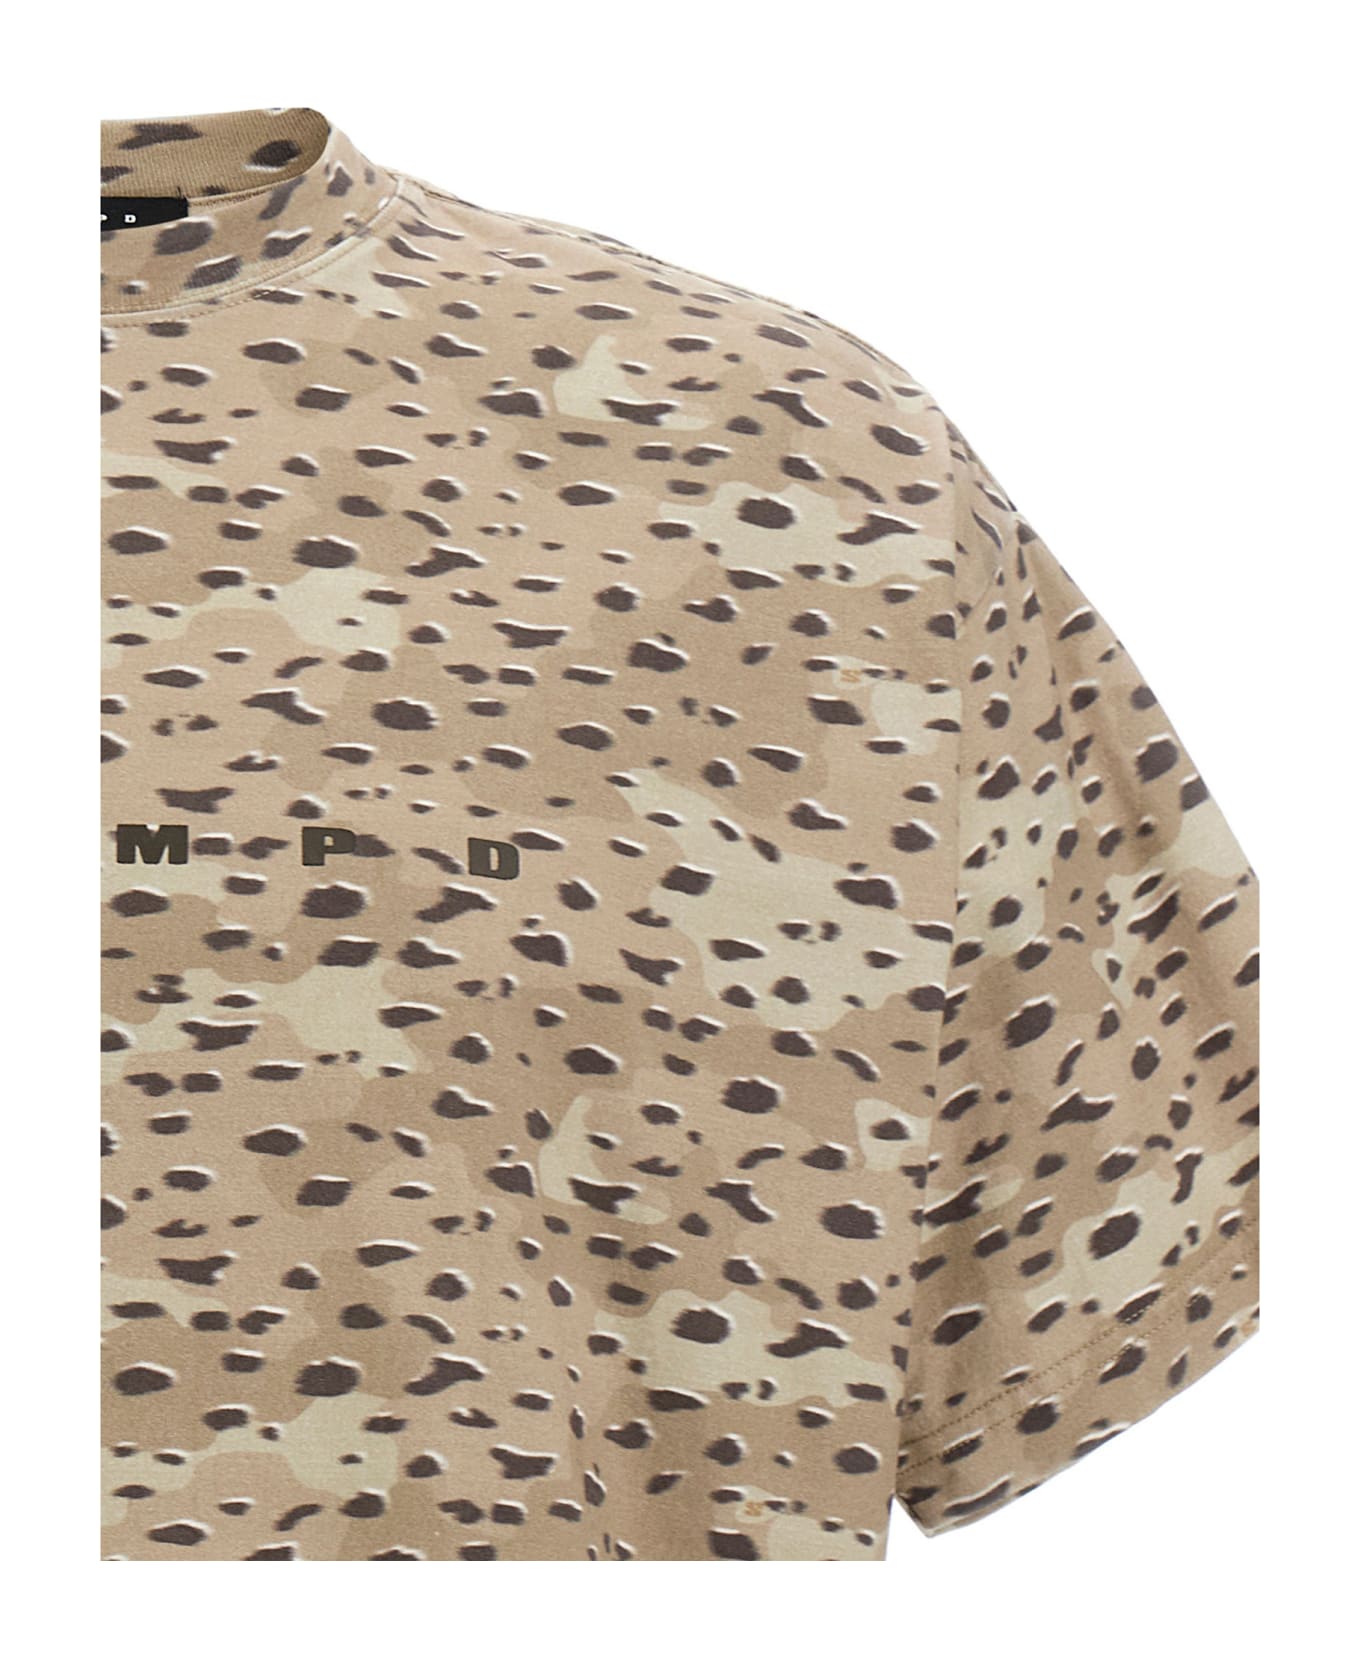 Stampd T-shirt 'camo Leopard' - Beige